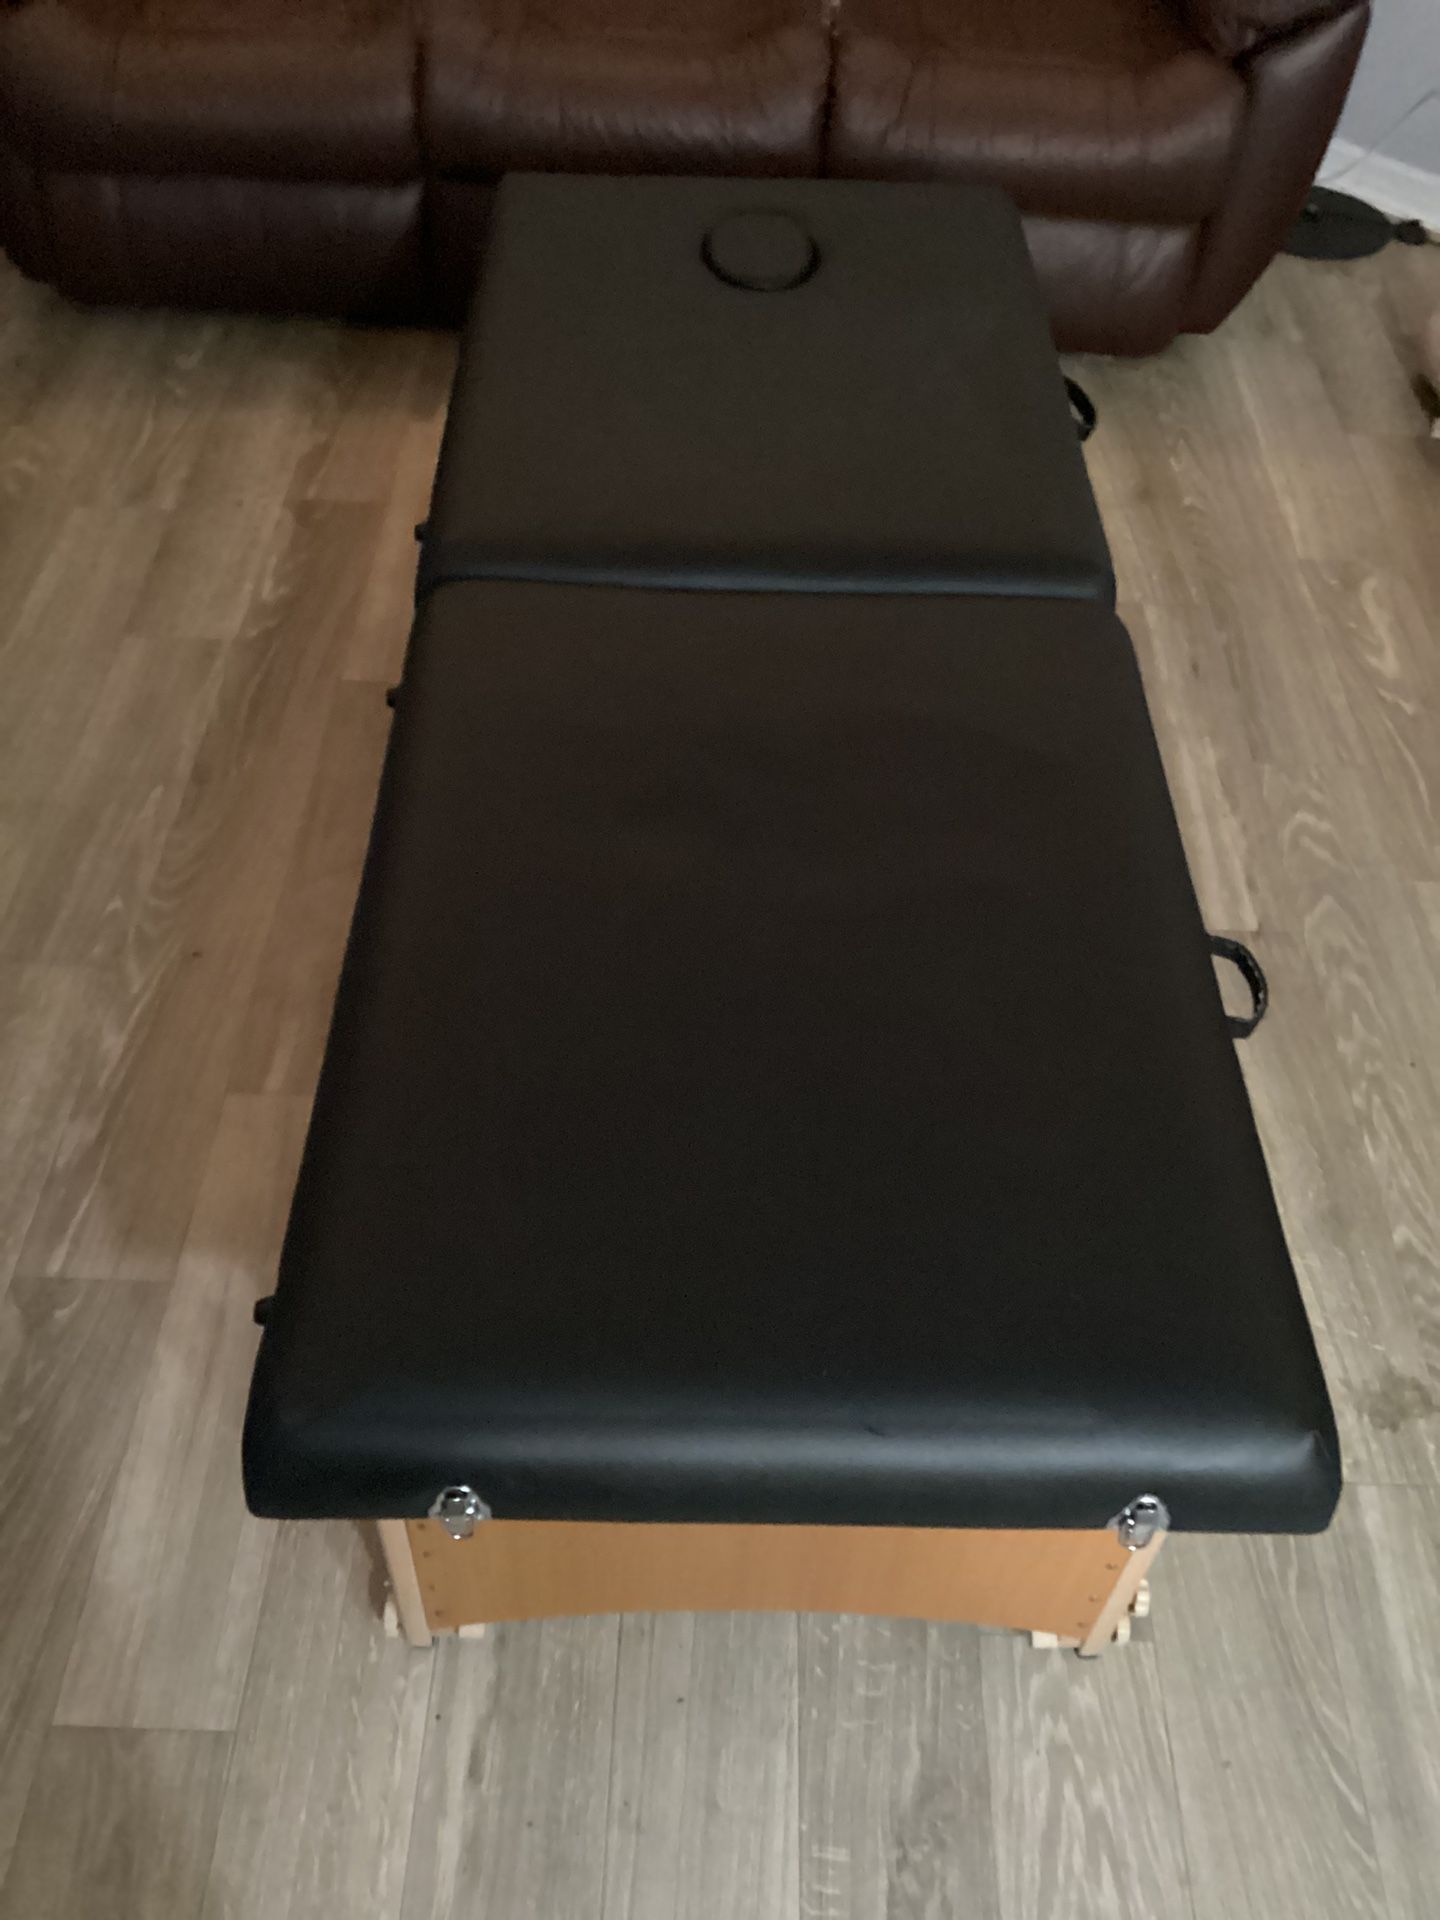 Foldable Massage Table 